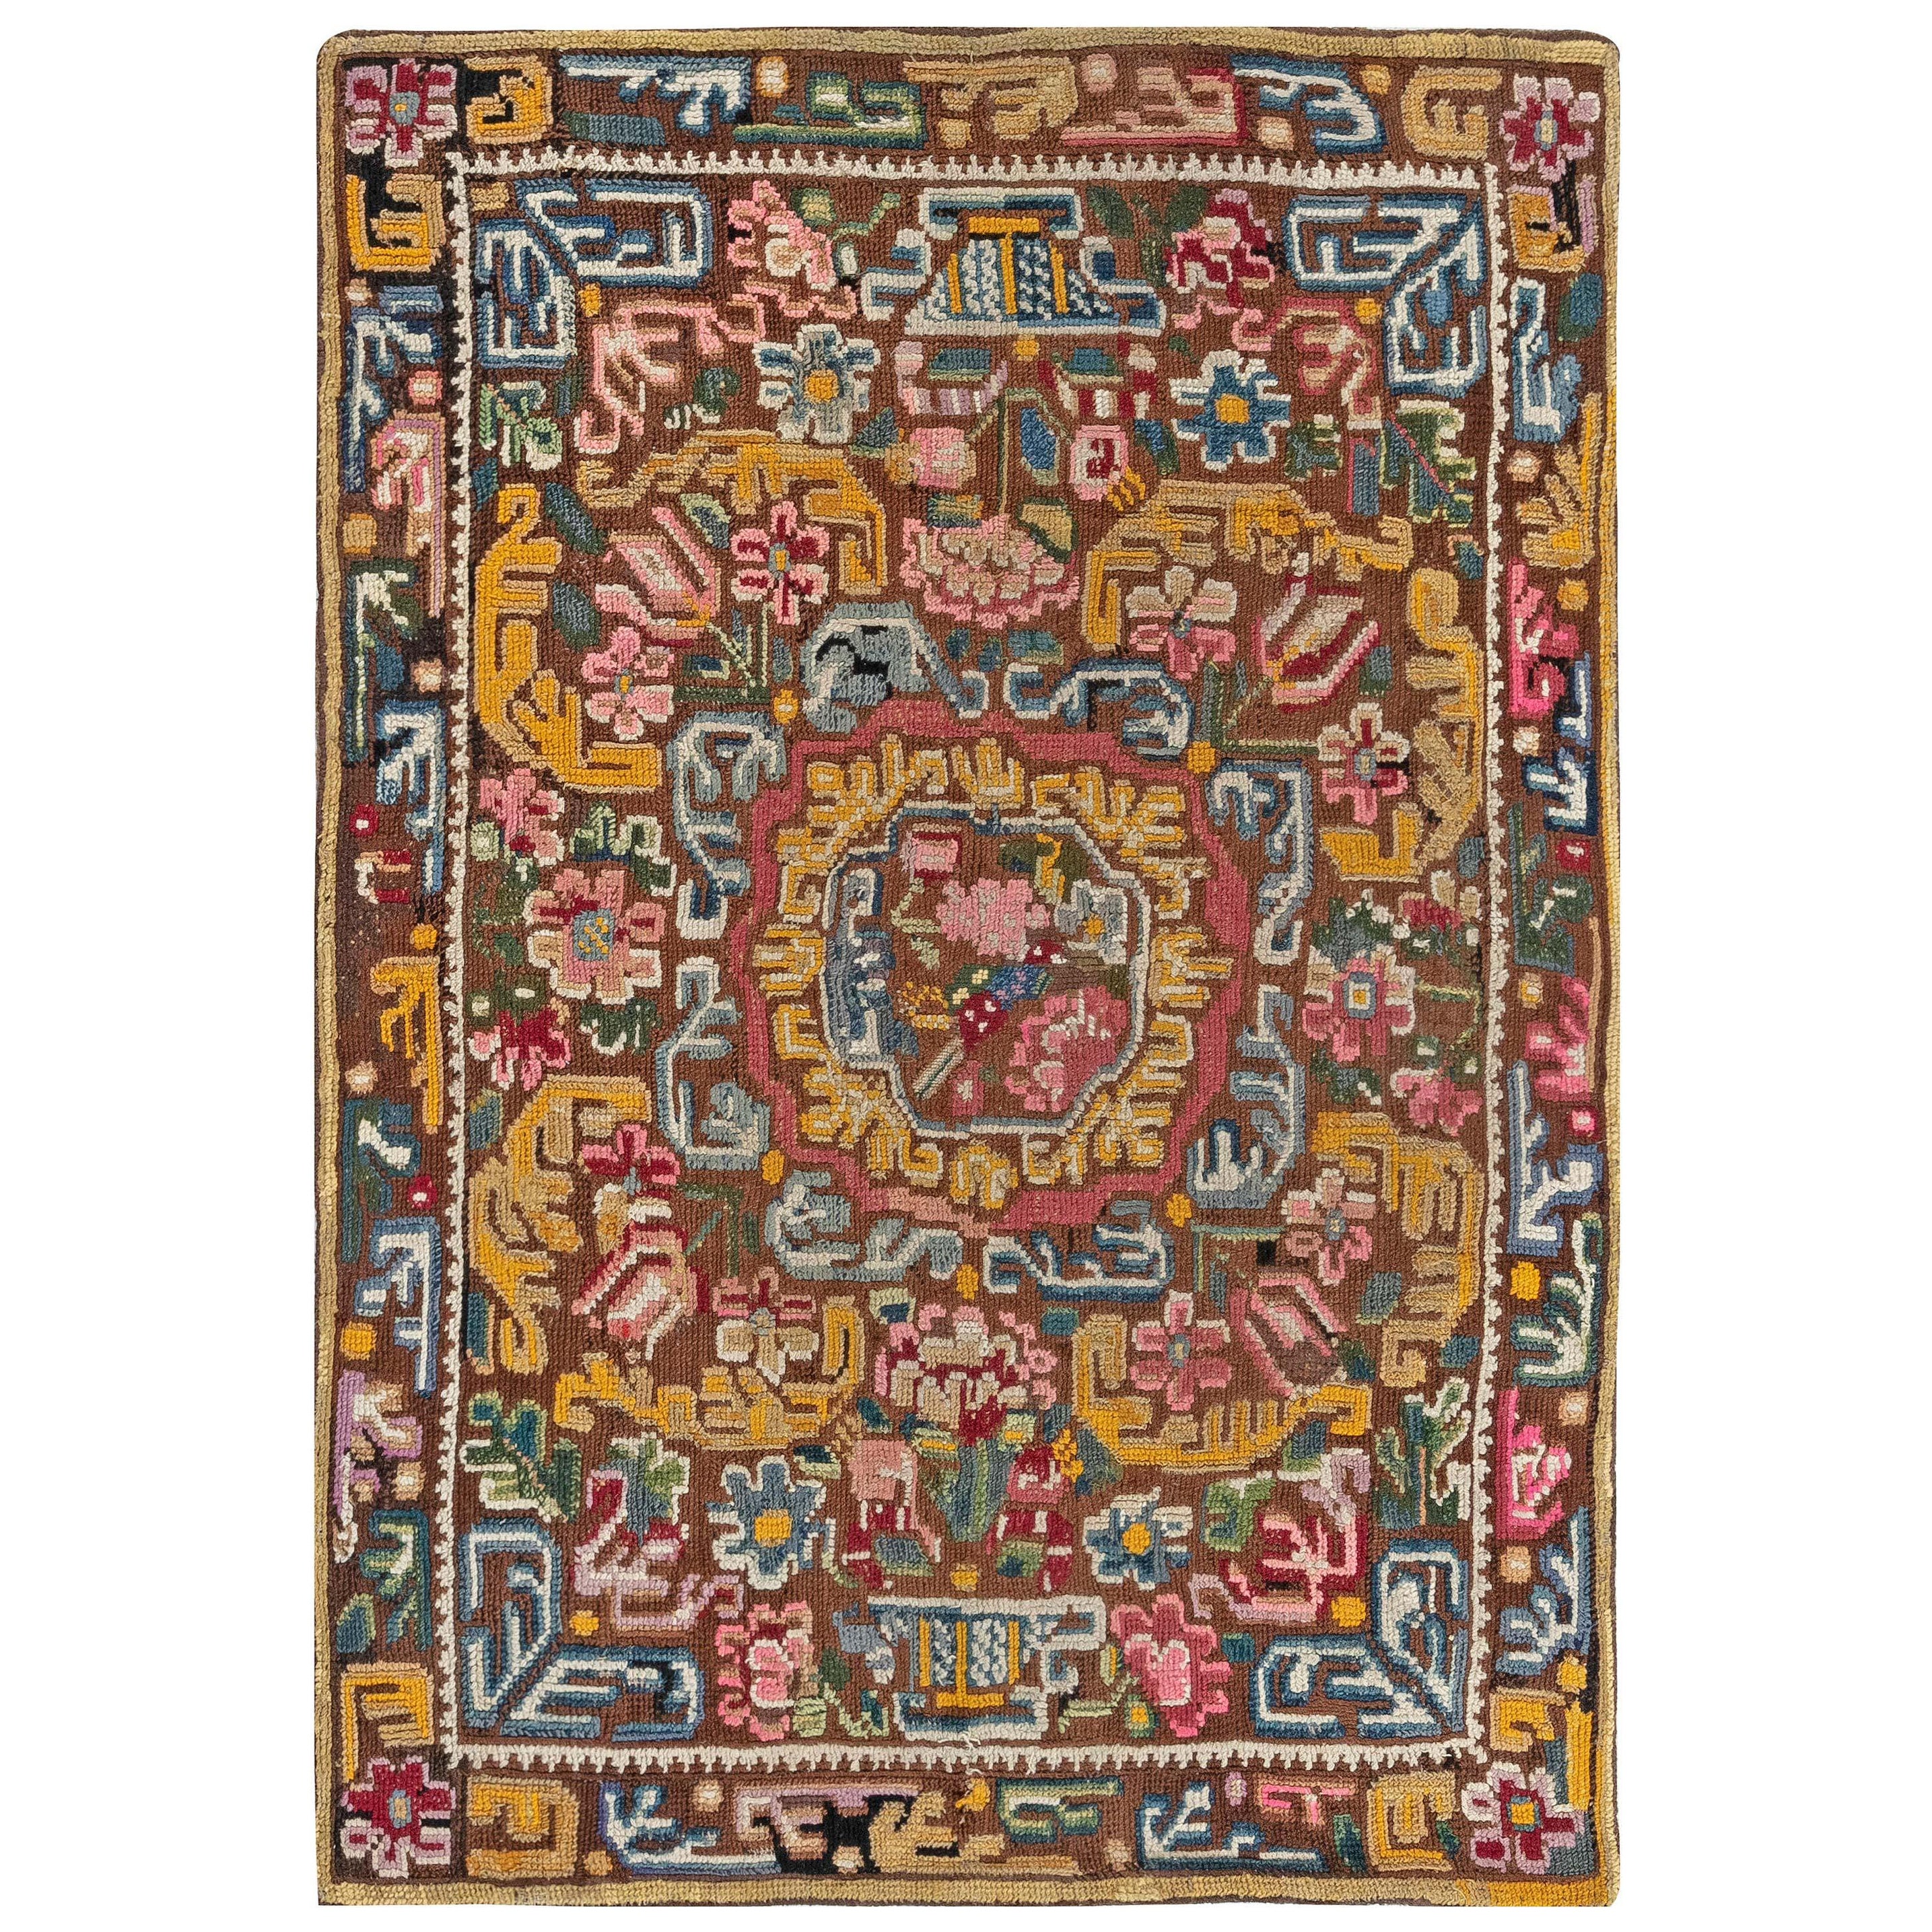 19th Century Geometric Floral Needlework Carpet